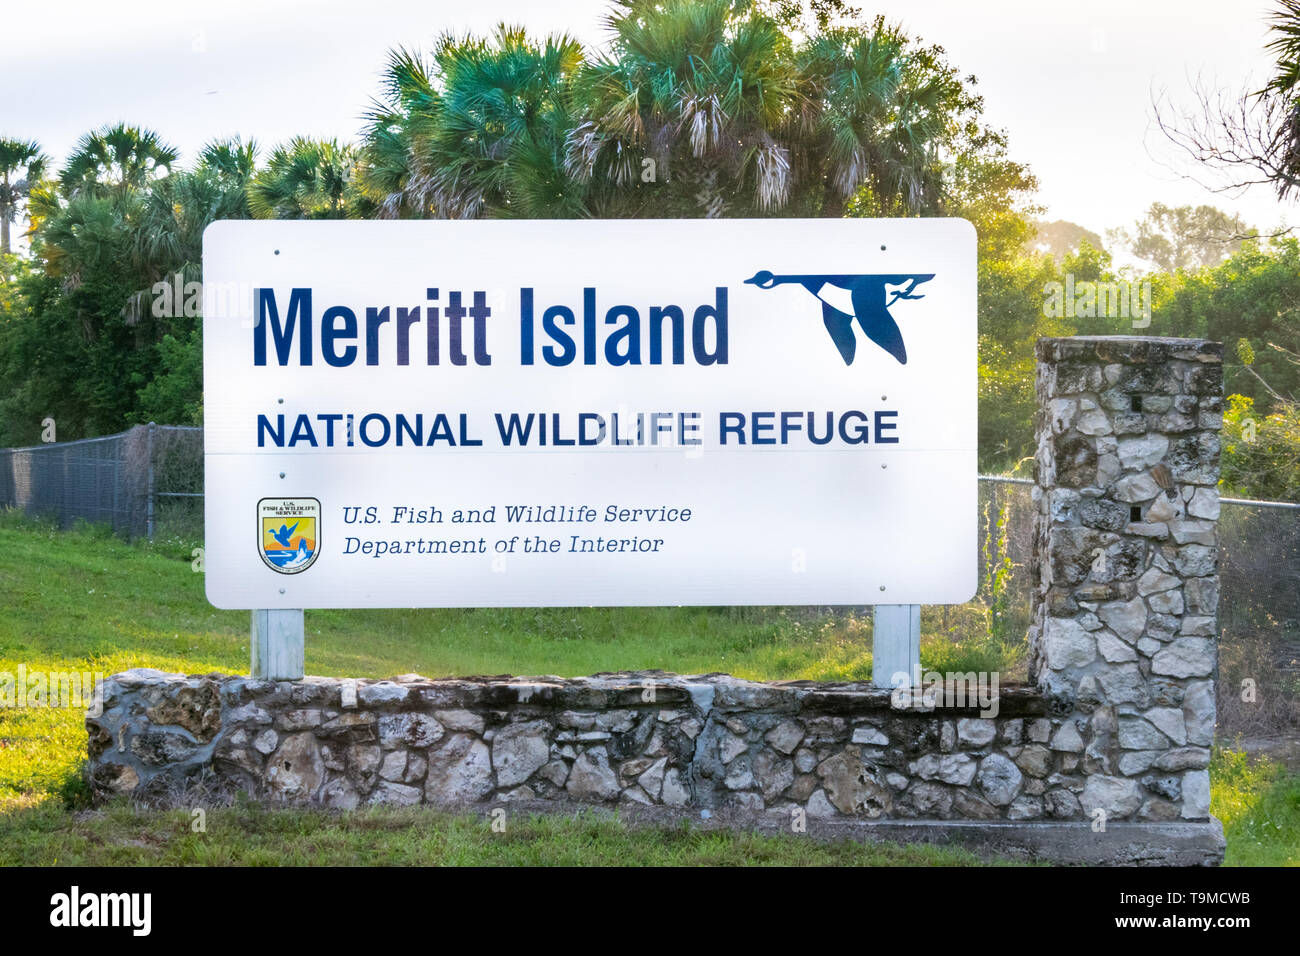 Merritt Island, Florida - Mai 12, 2019: Merritt Island National Wildlife Refuge ist ein 140.000 Hektar an der Atlantikküste Floridas größten verweigern, b Stockfoto